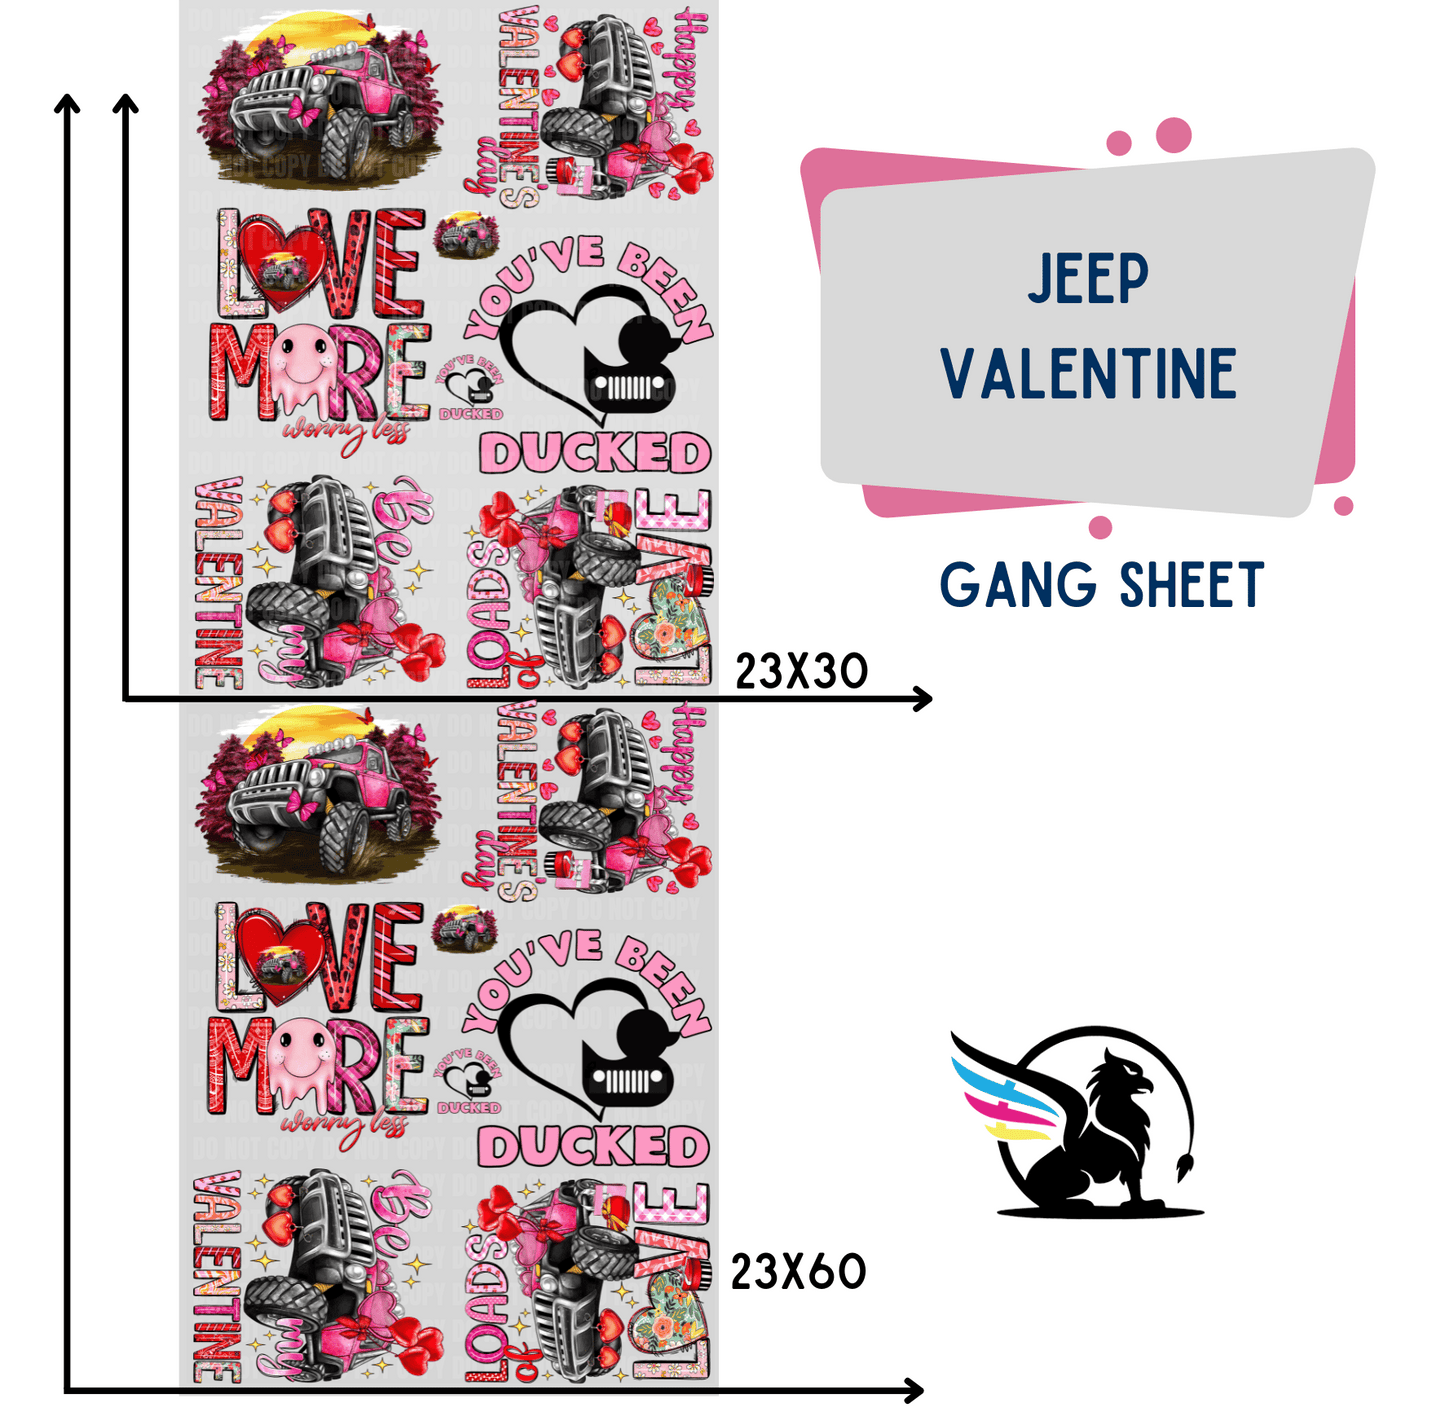 Premade Gang Sheet | Jeep Valentines